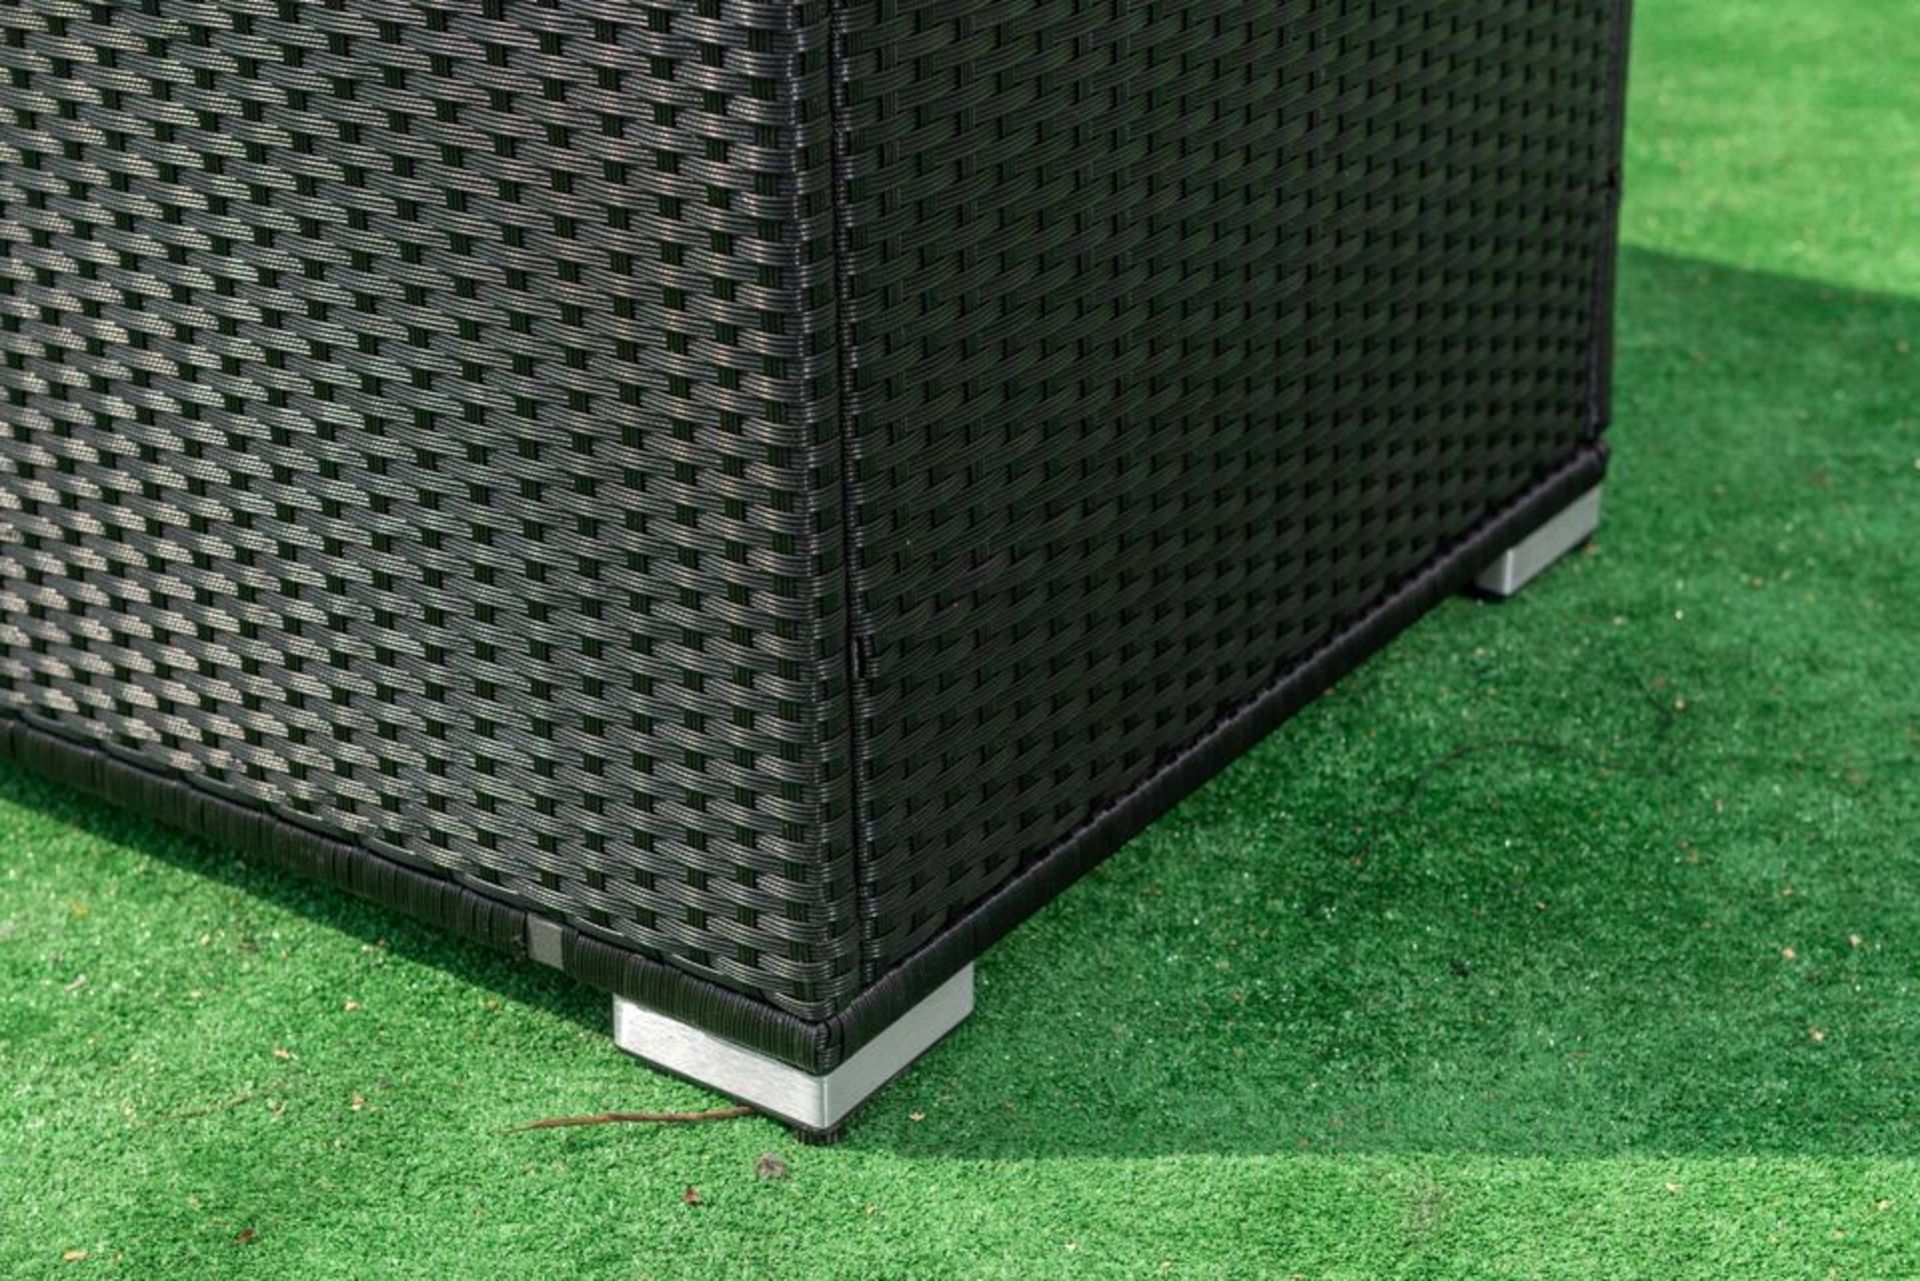 Black Rattan Waterproof Storage Box - Image 2 of 4